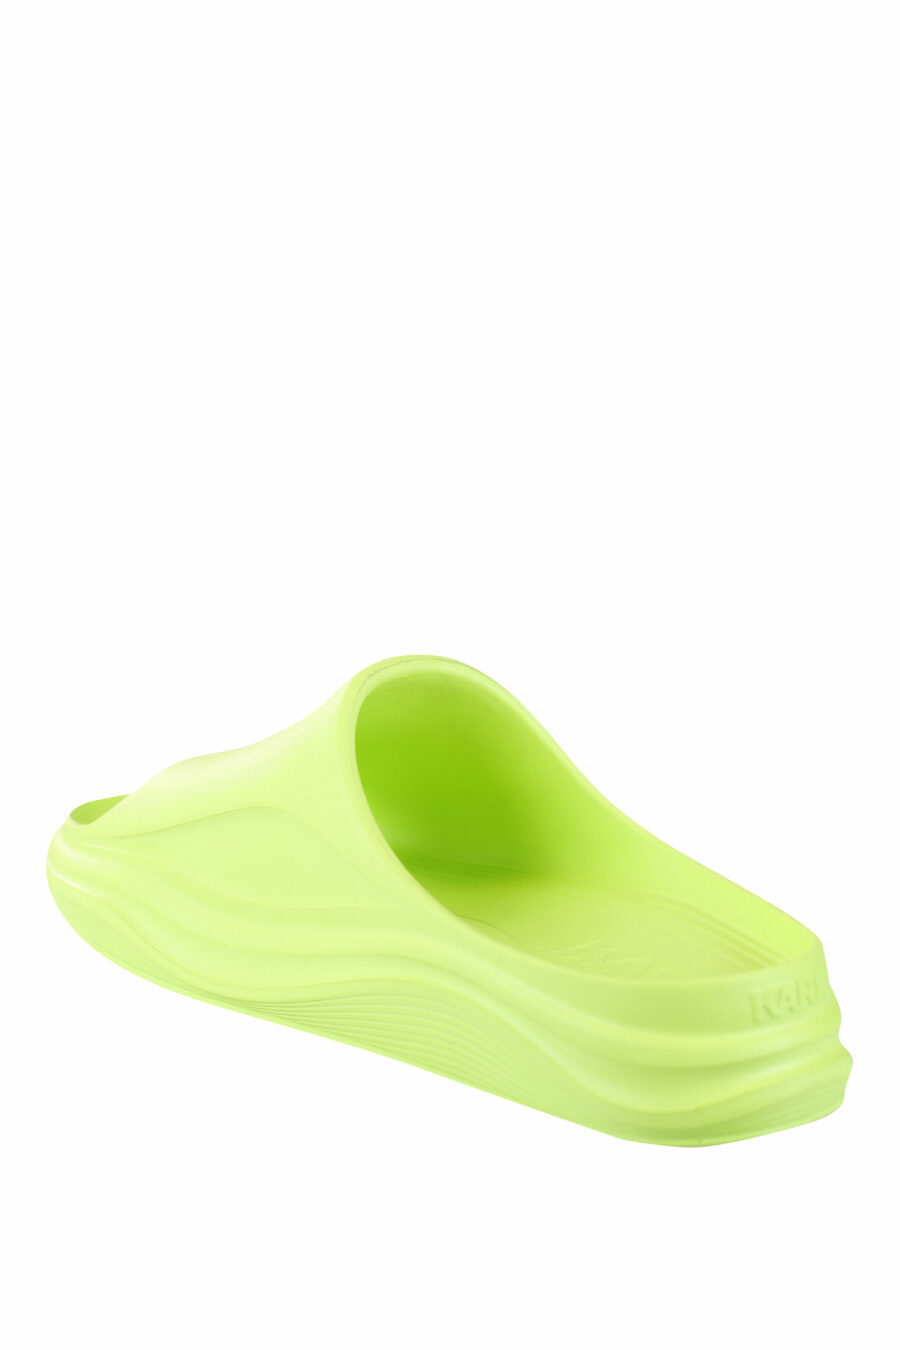 Green eco flip flops with monochrome logo - IMG 0047 1